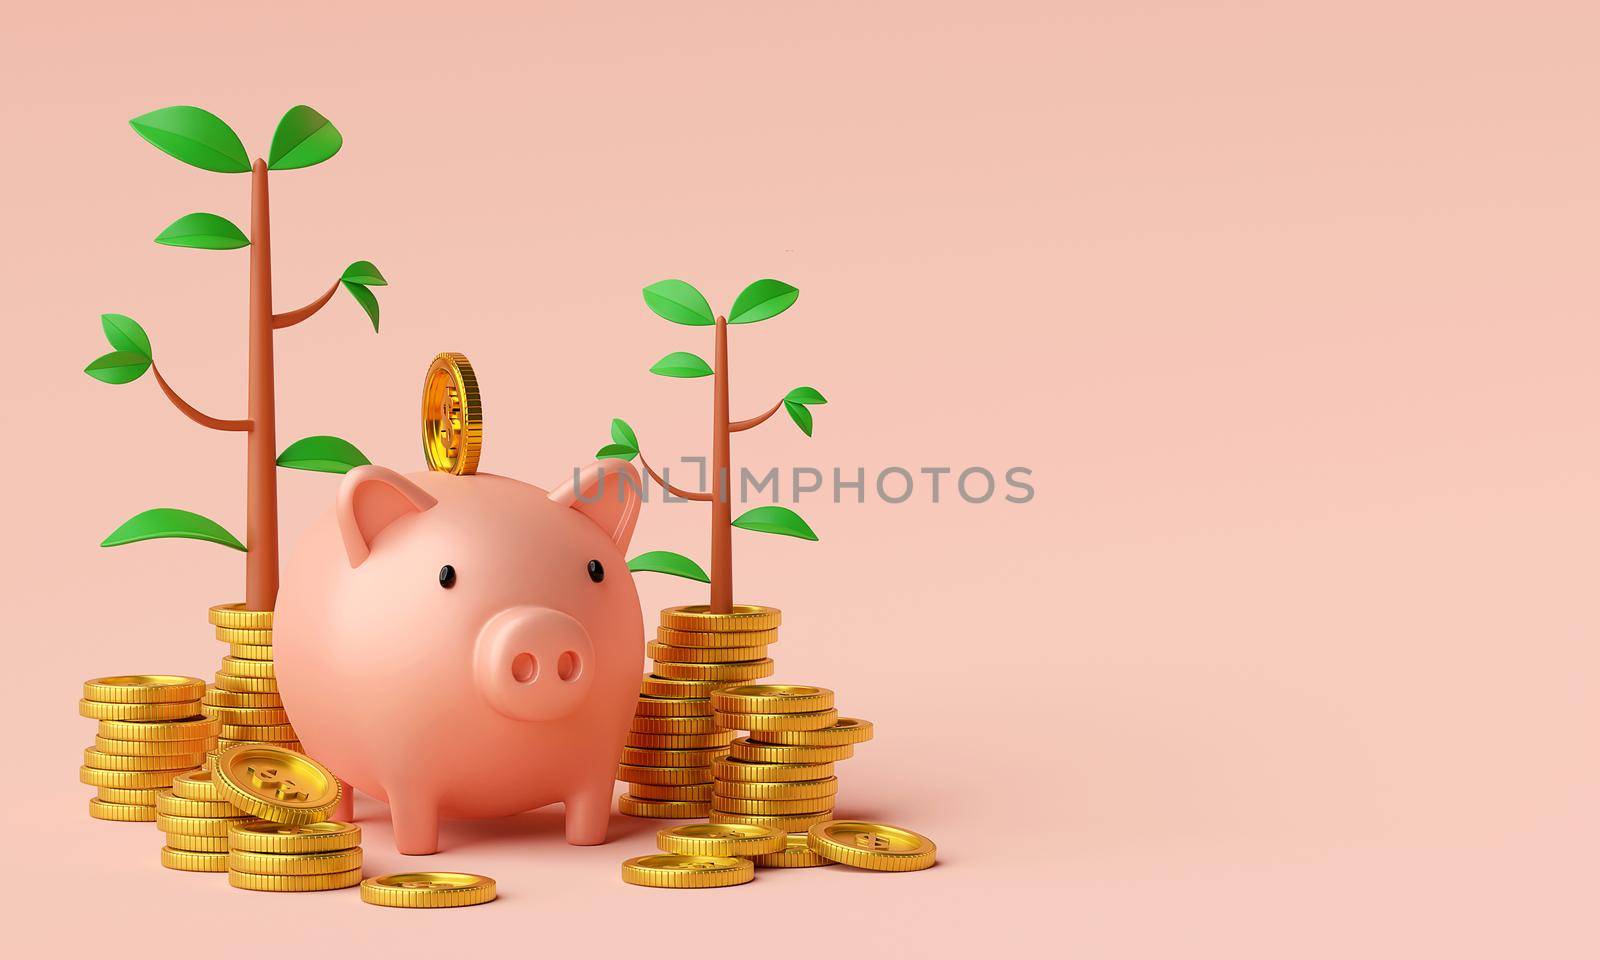 Money Savings Concept, Putting a coin into Piggy bank, Banner background, 3d rendering by nutzchotwarut